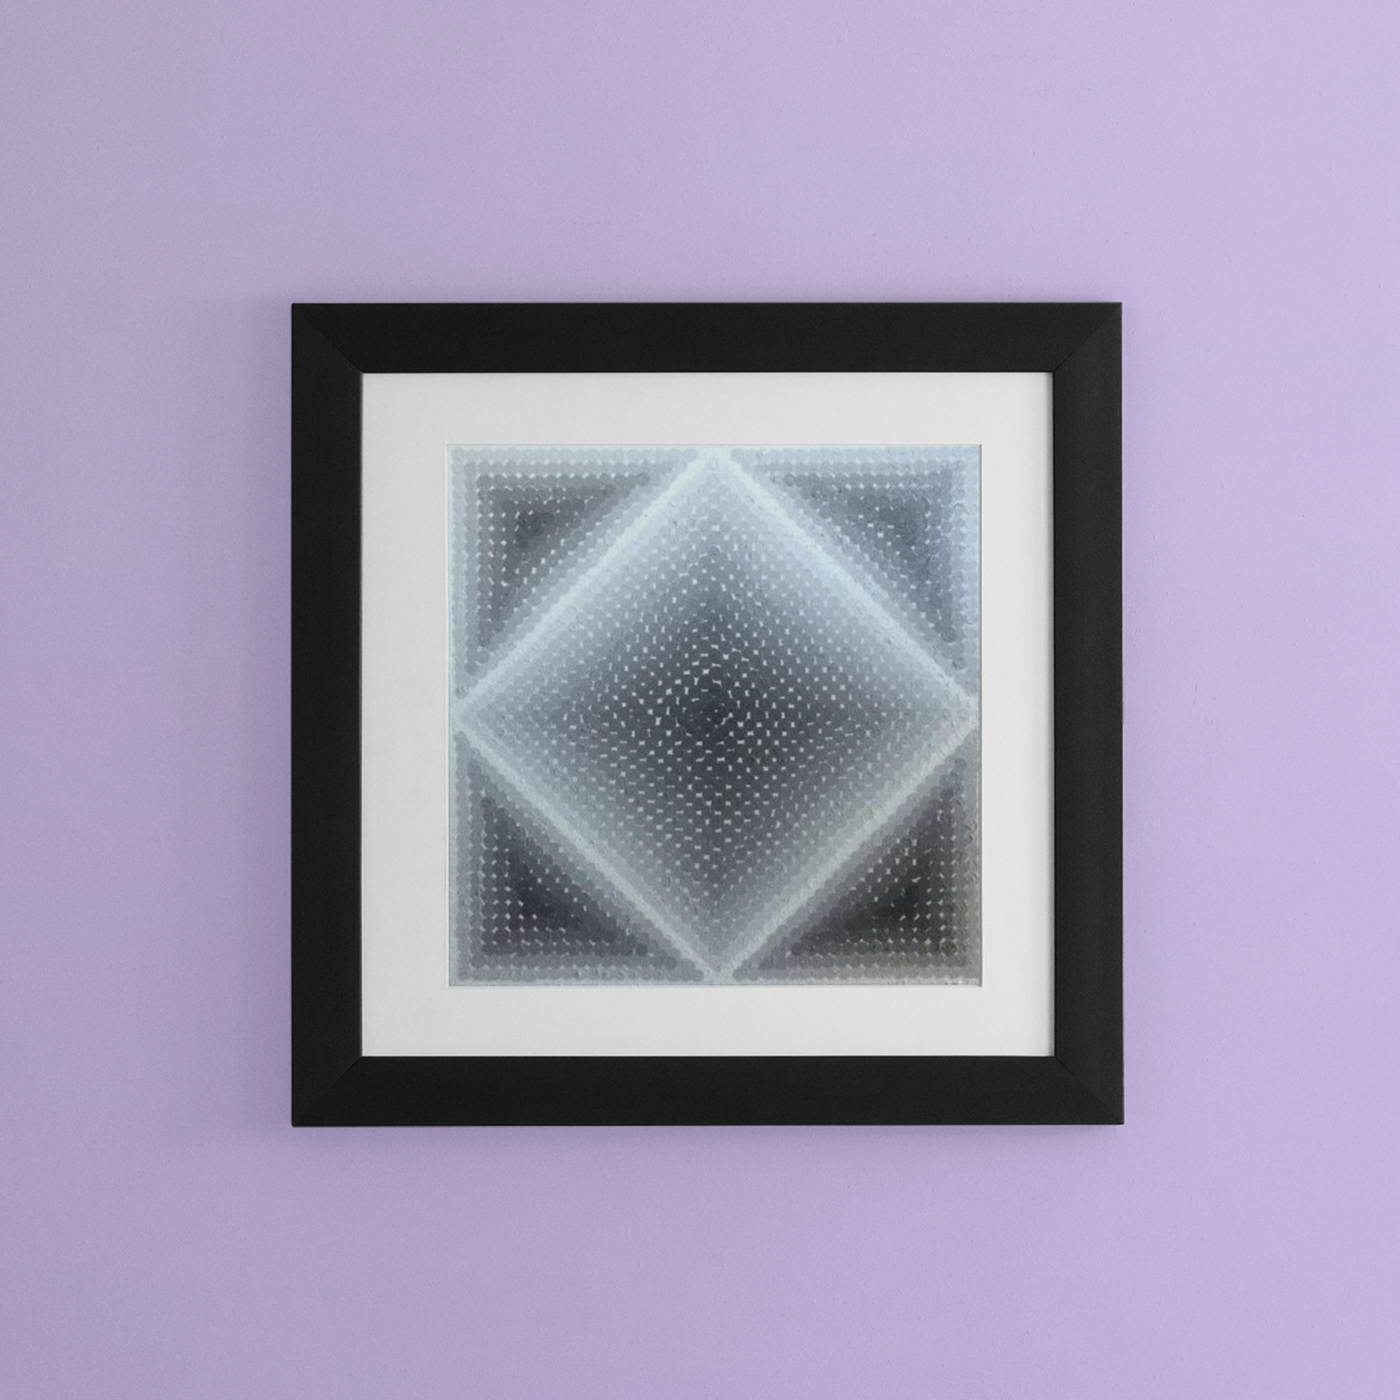 Shades of Grey Framed Print by Michael Turchin